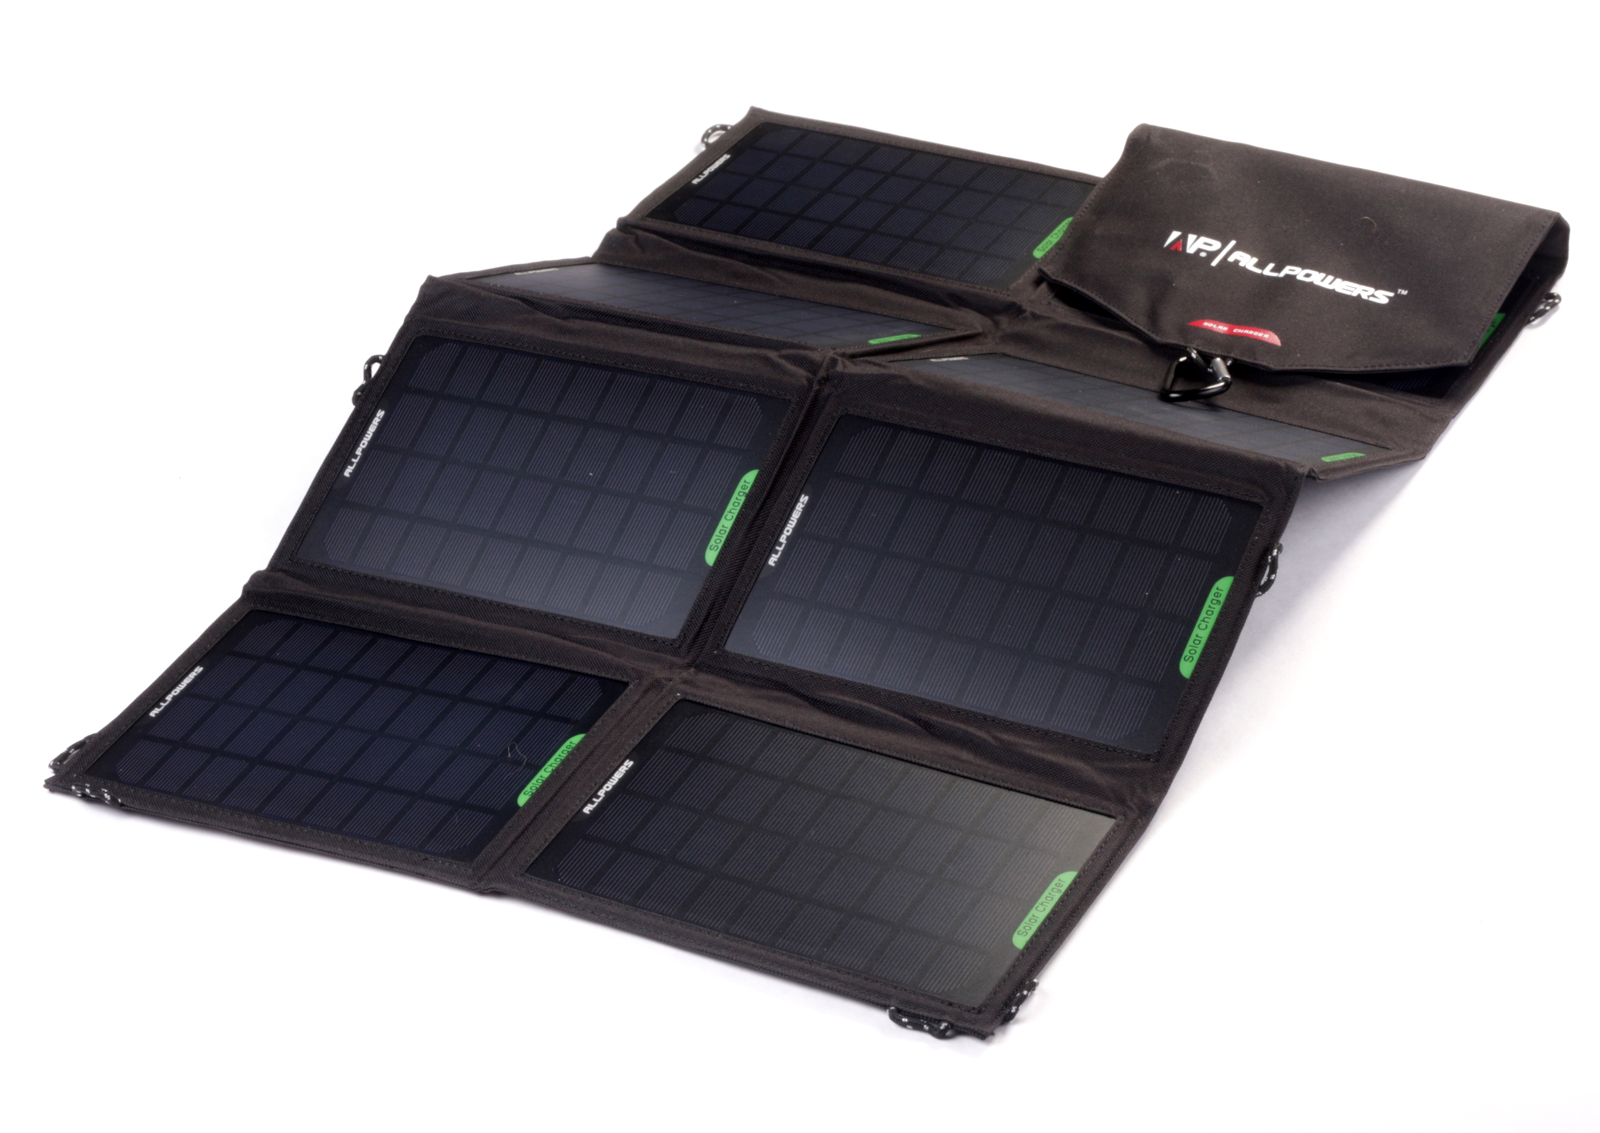  Брендовая солнечная зарядка ALLPOWERS для ноутбука - 28 Вт